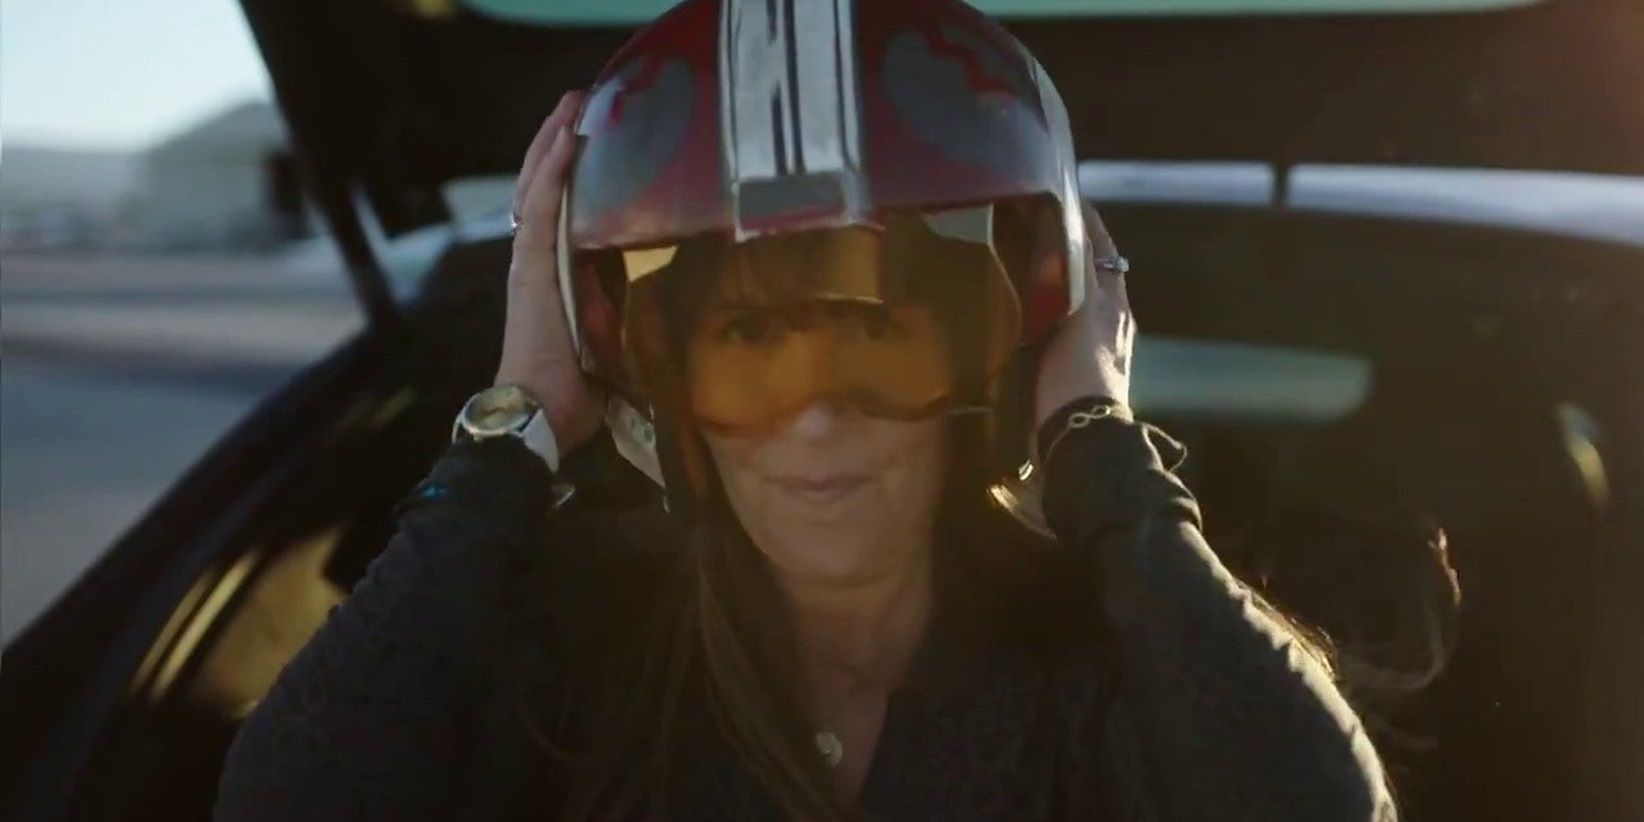 Patty_Jenkins_wearing_an_X-wing_pilot's_helmet